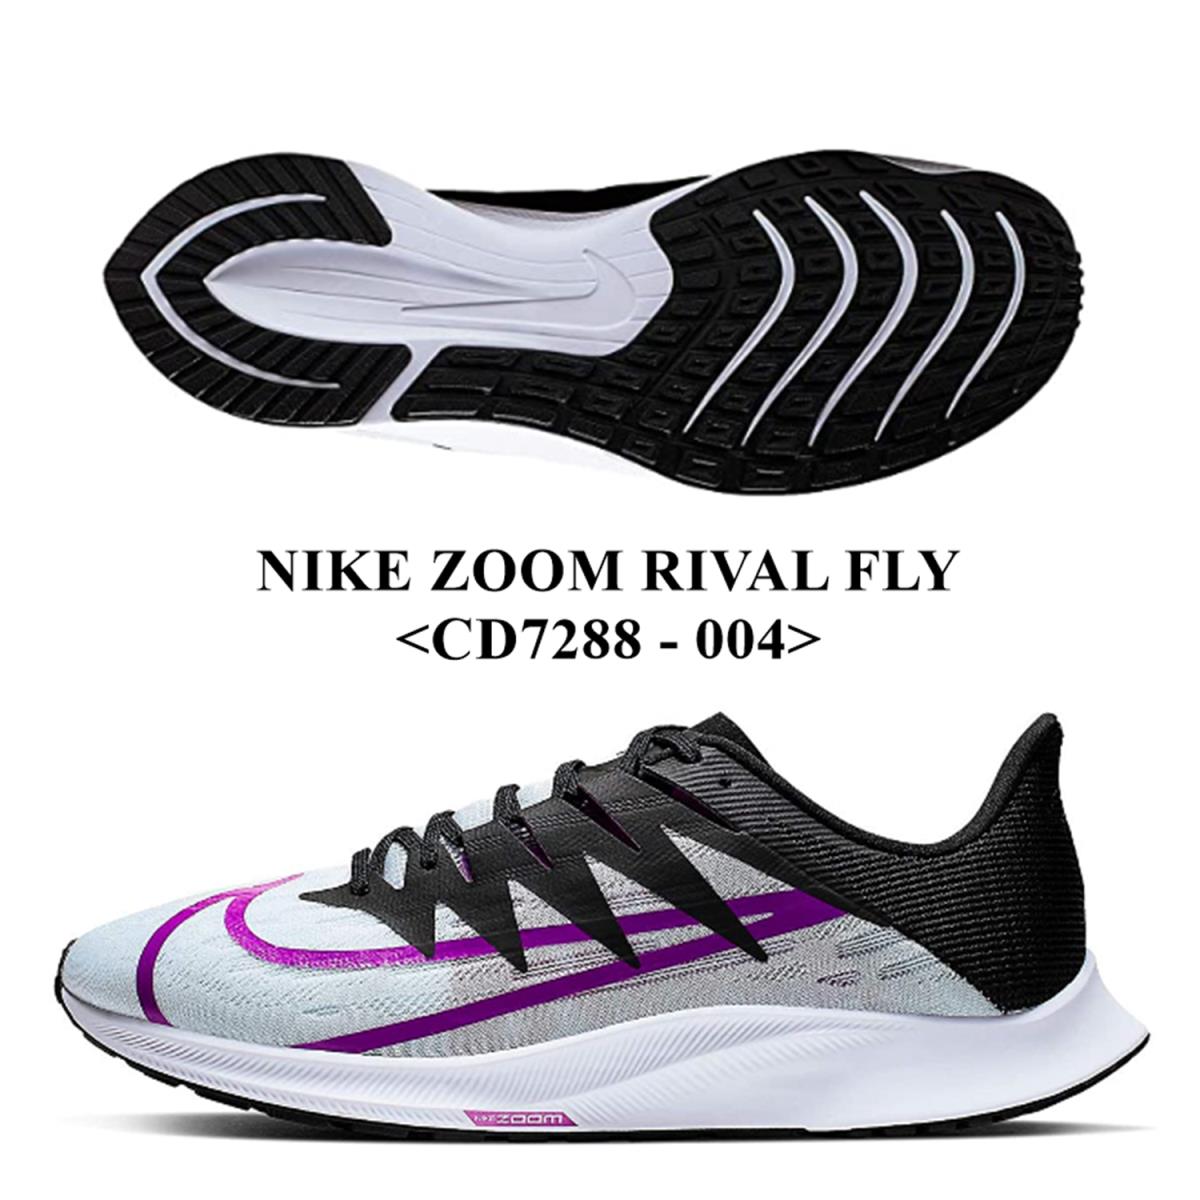 Nike Zoom Rival Fly CD7288 - 004 Men`s Running/sneaker Shoes - PURE PLATINUM/HYPER VIOLET, Manufacturer: PURE PLATINUM/HYPER VIOLET